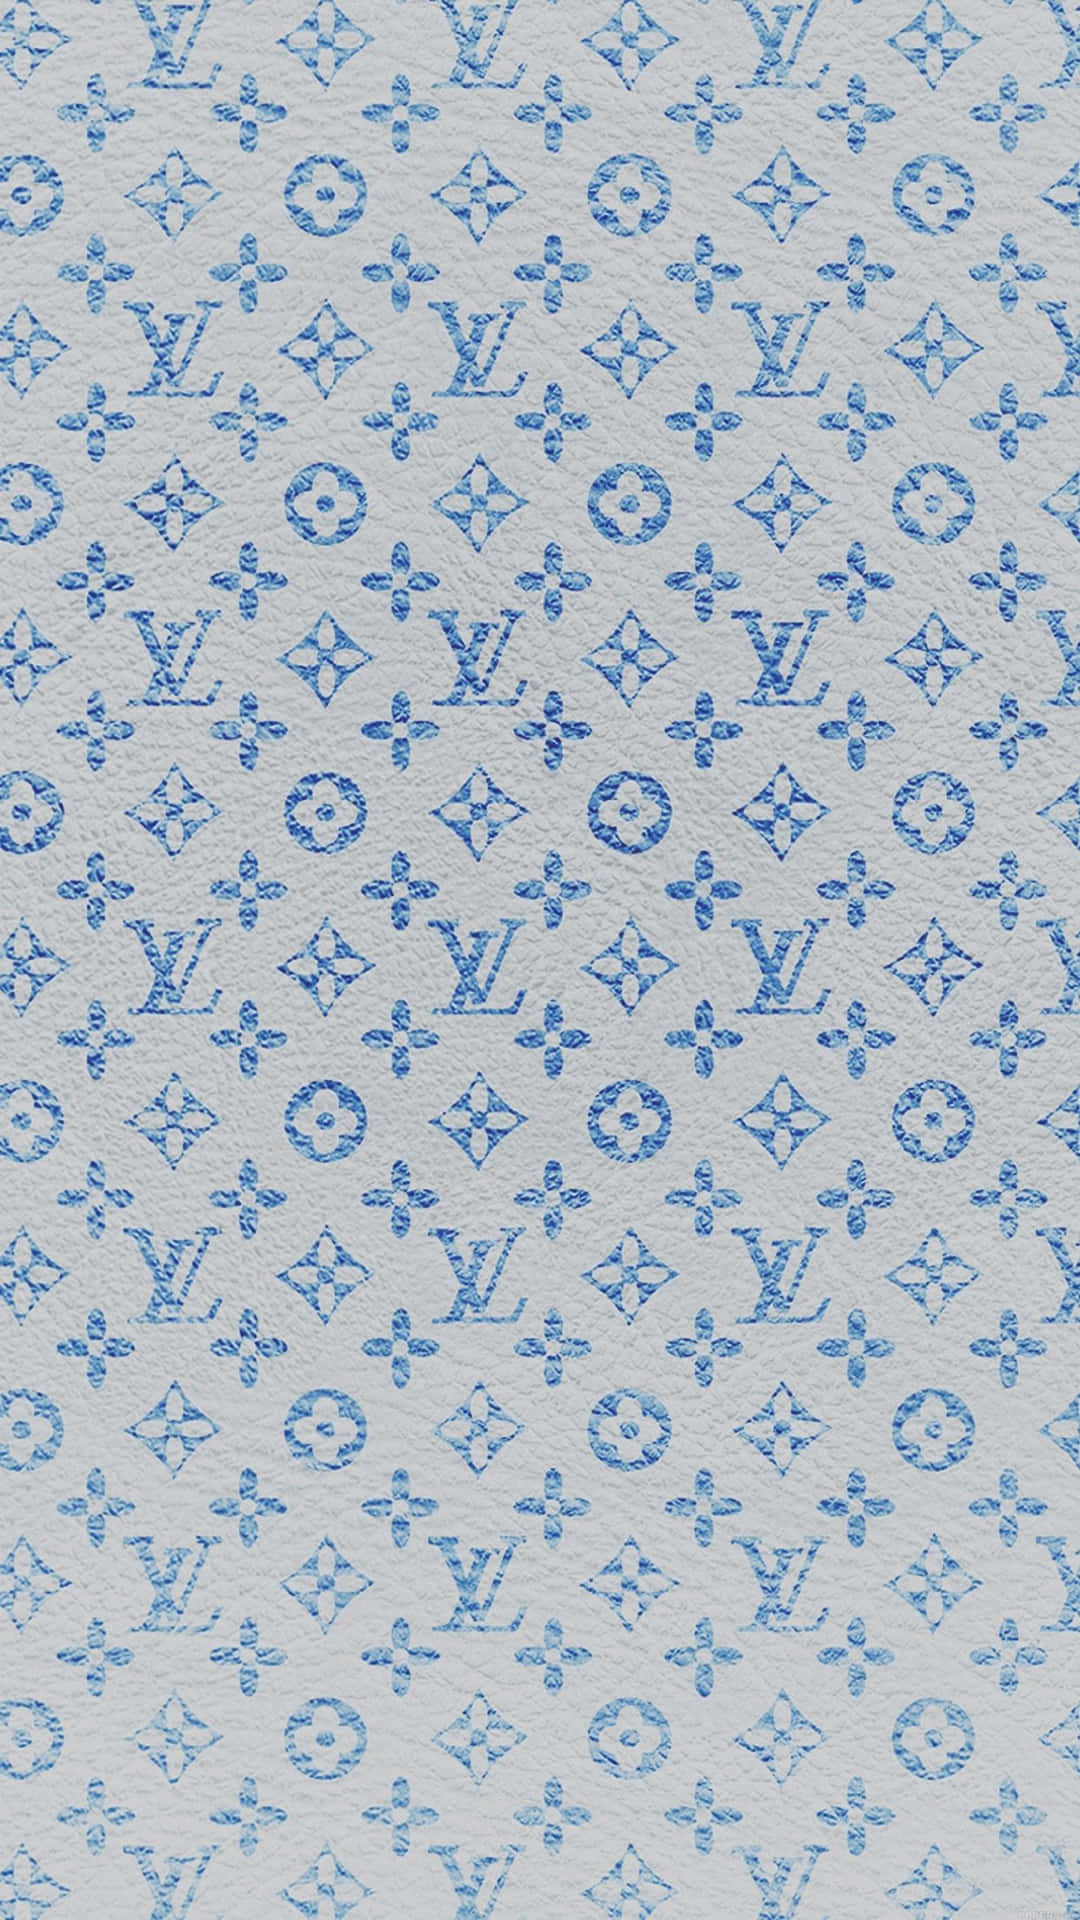 Sestilfuld Ud Med Louis Vuittons Klassiske Blå. Wallpaper